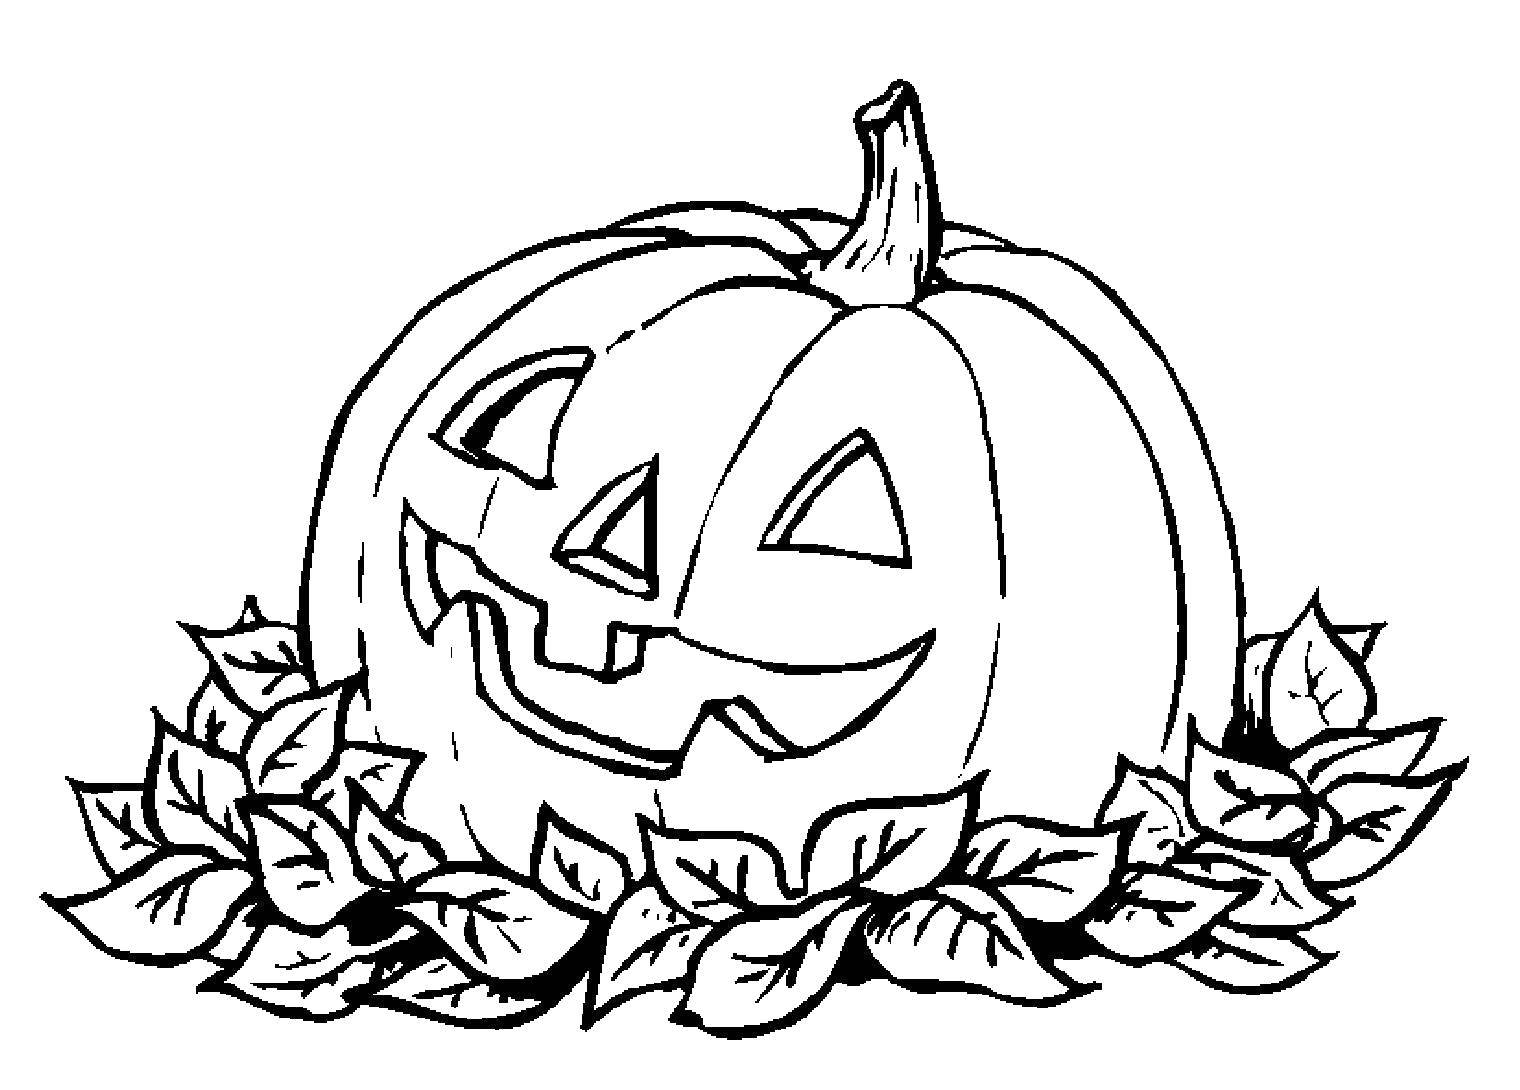 Coloring Pumpkin on Halloween. Category Halloween. Tags:  Halloween, Ghost, pumpkin.